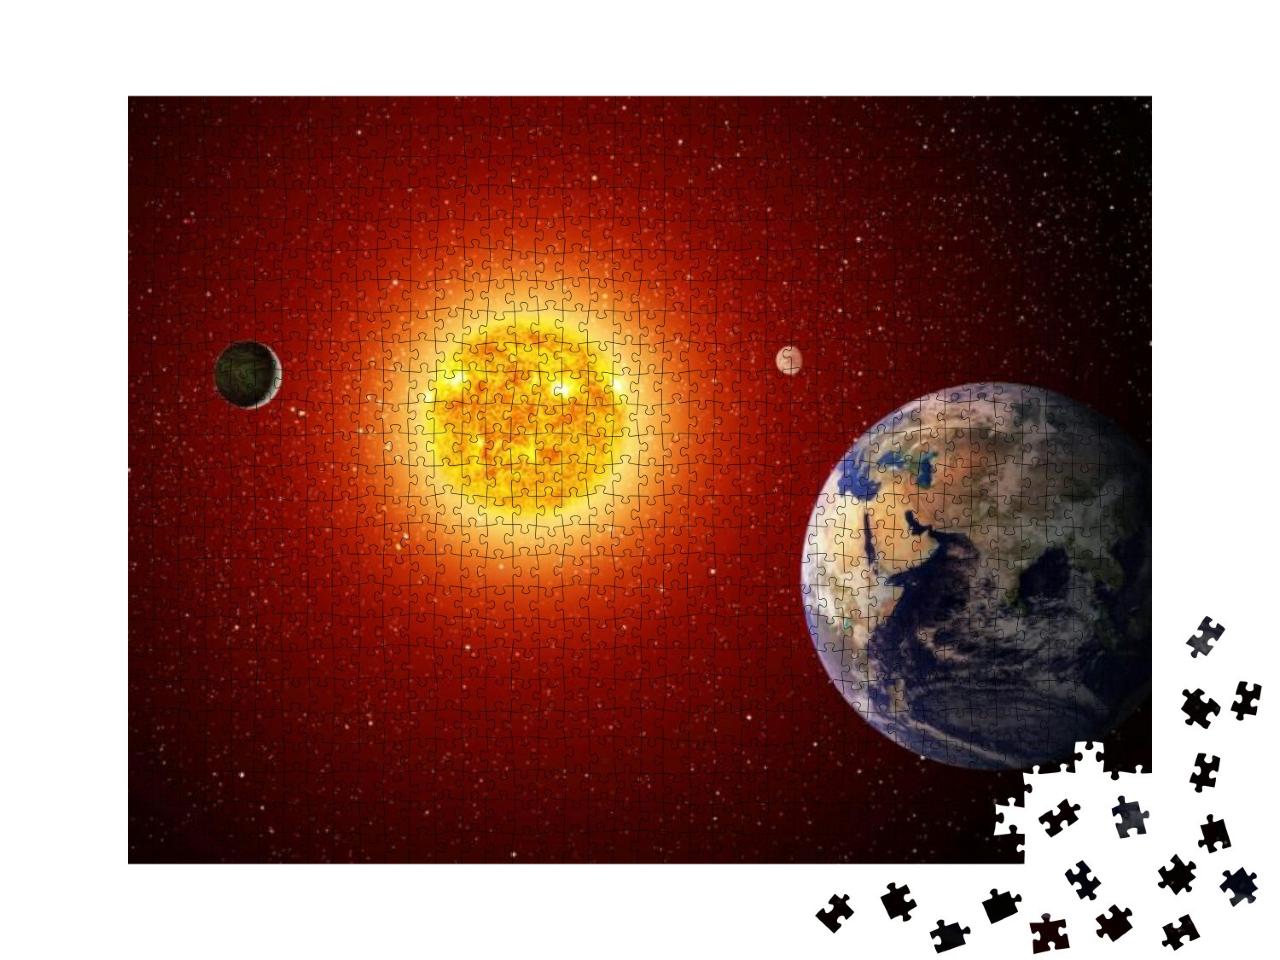 Puzzle 1000 Teile „Sonnensystem“